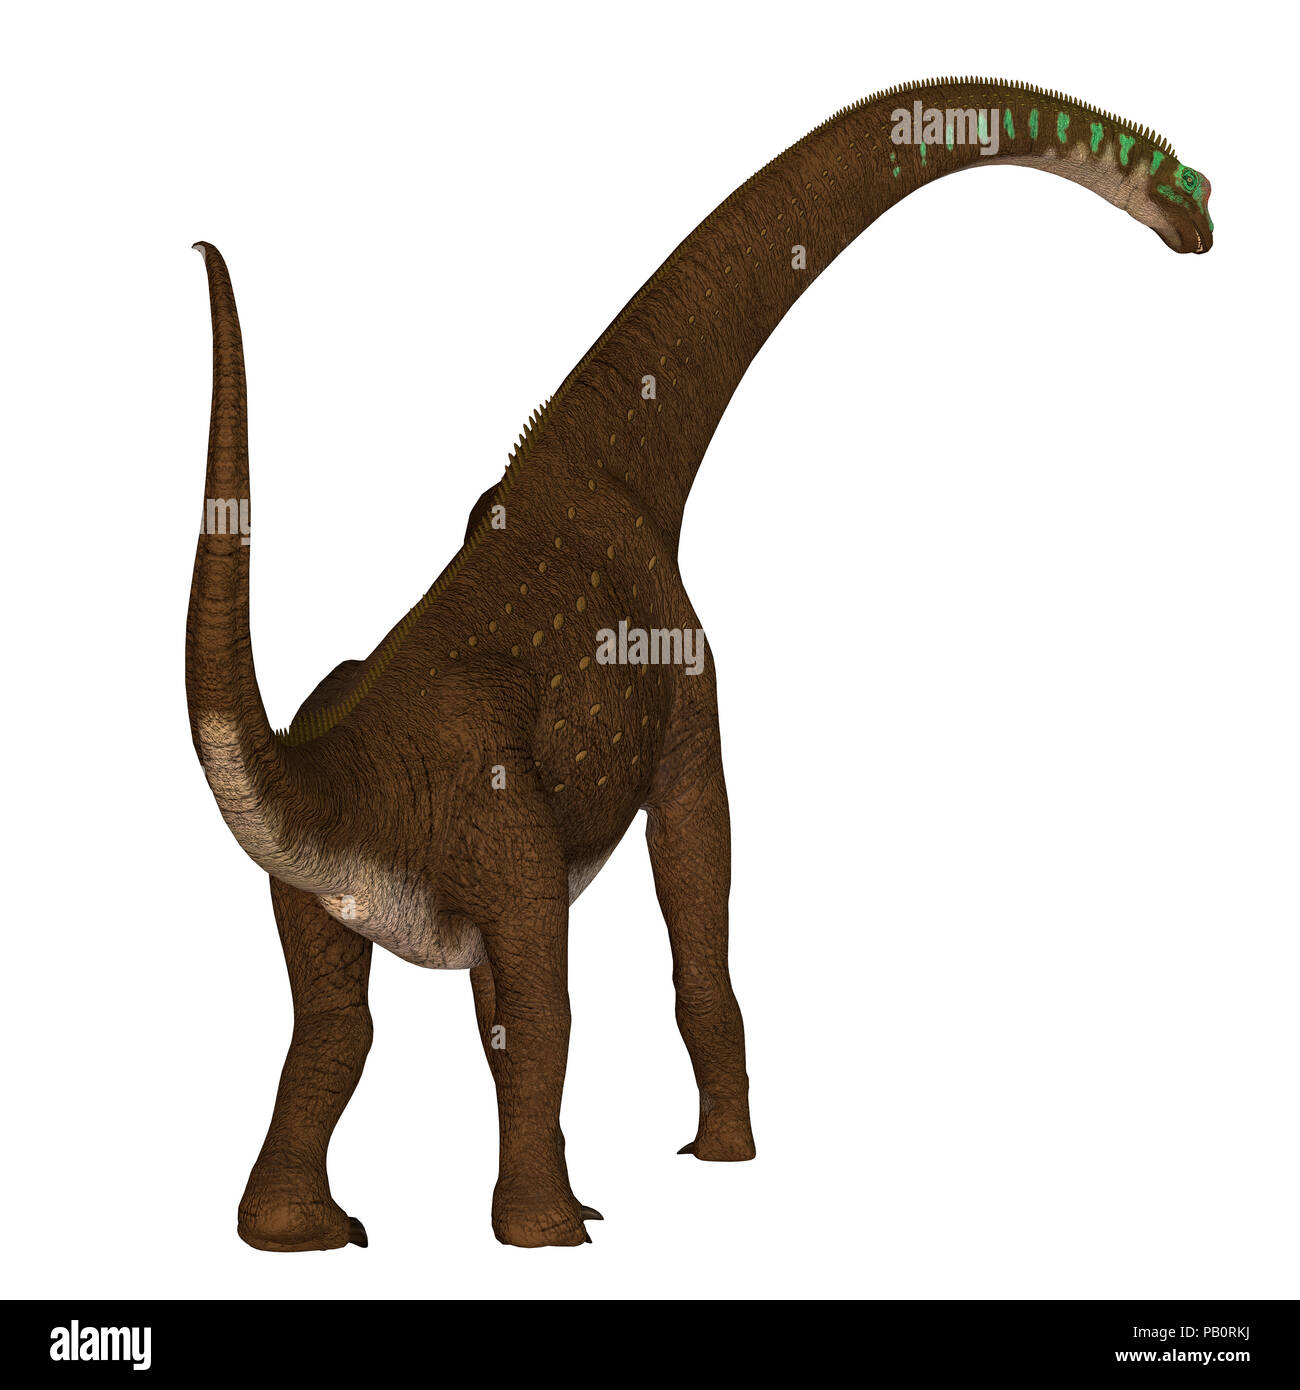 Giraffatitan Dinosaur Tail - Giraffatitan was a herbivorous sauropod dinosaur that lived in Africa during the Jurassic Period. Stock Photo